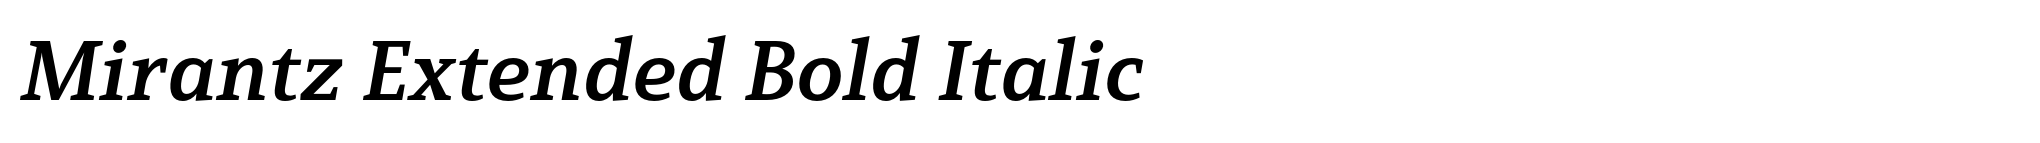 Mirantz Extended Bold Italic image